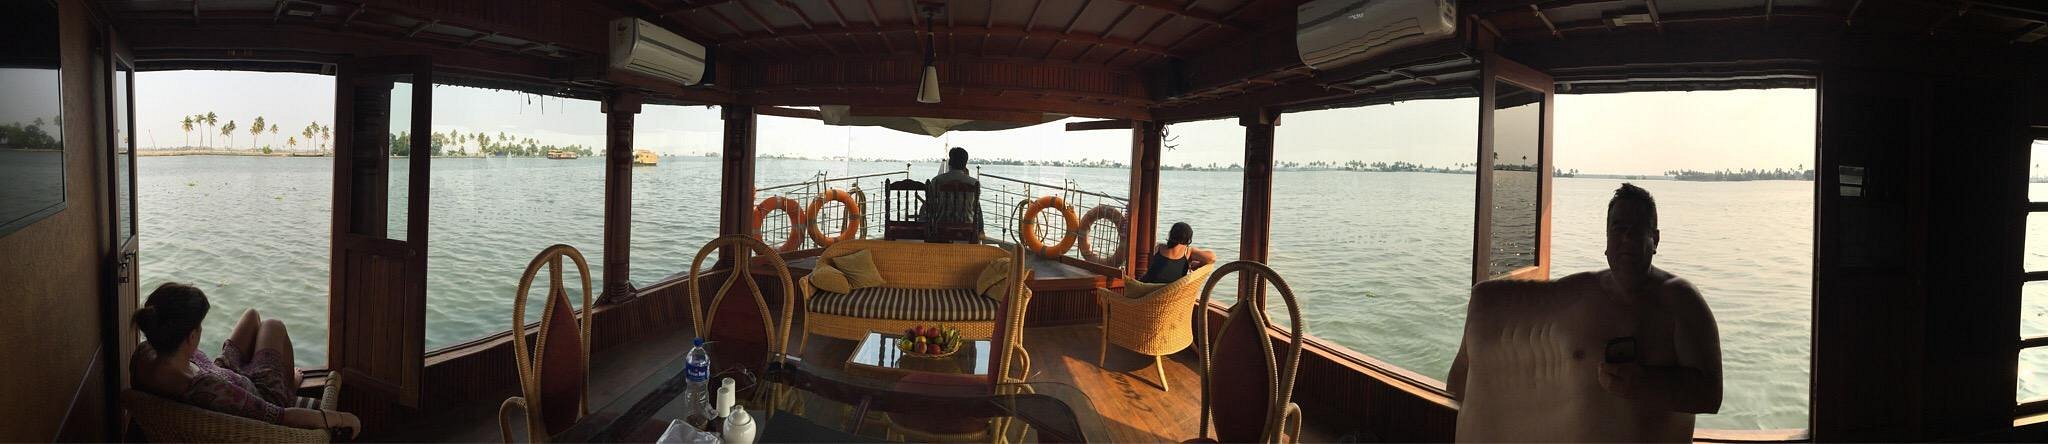 Kerala Houseboat Interior